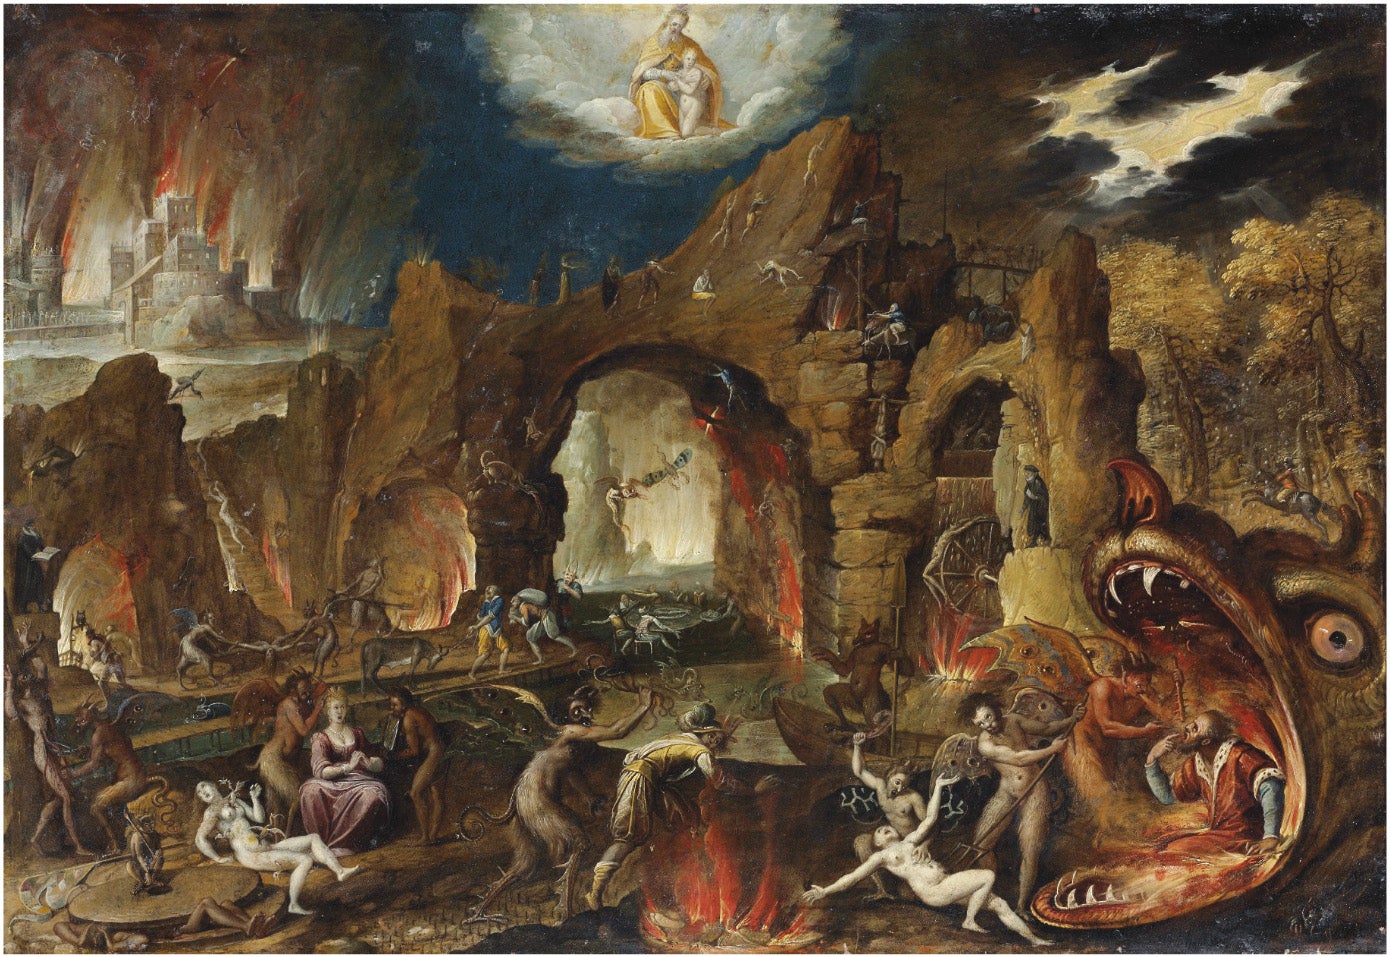 The Harrowing of Hell by Jacob van Swanenburgh